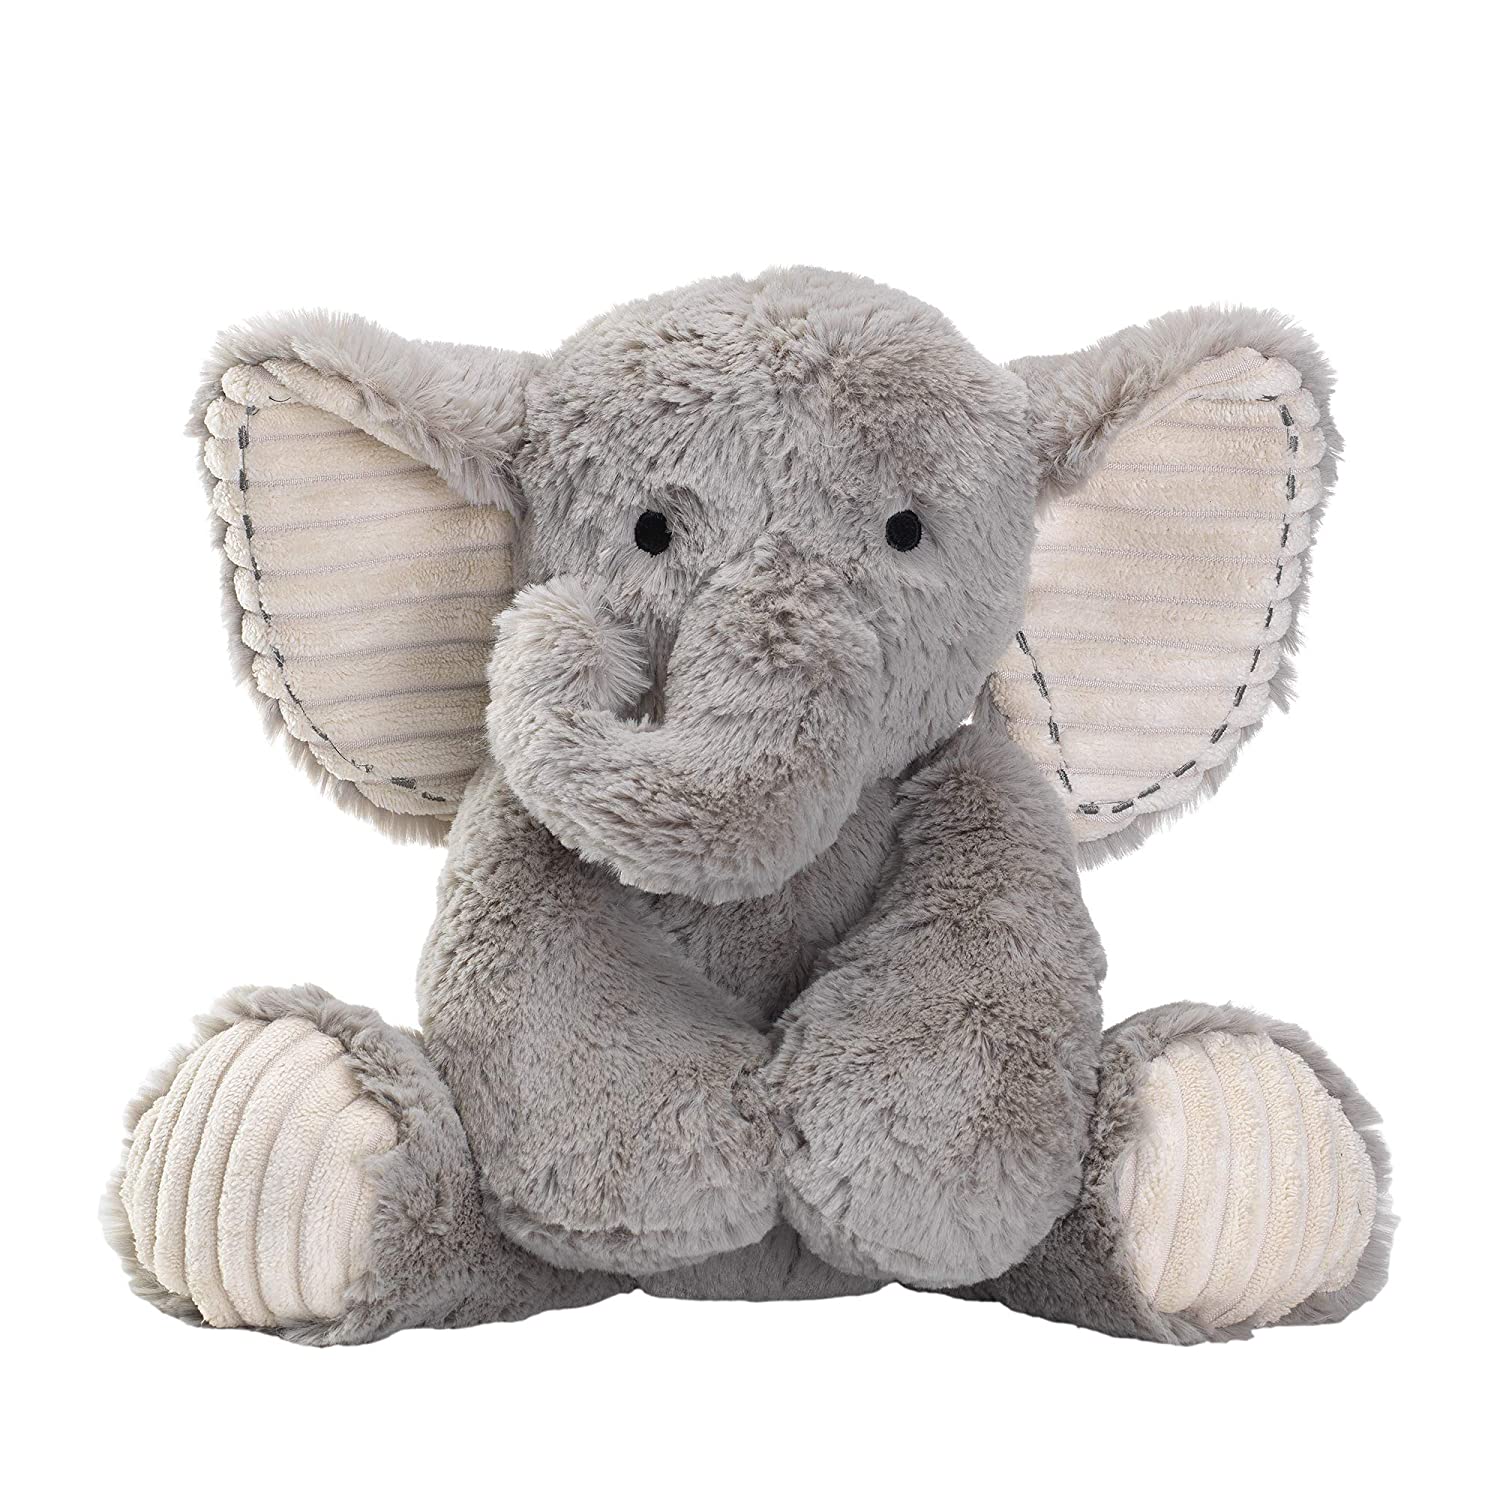 ebba Cute Plush Elephant Stuffed Animal, 9-Inch